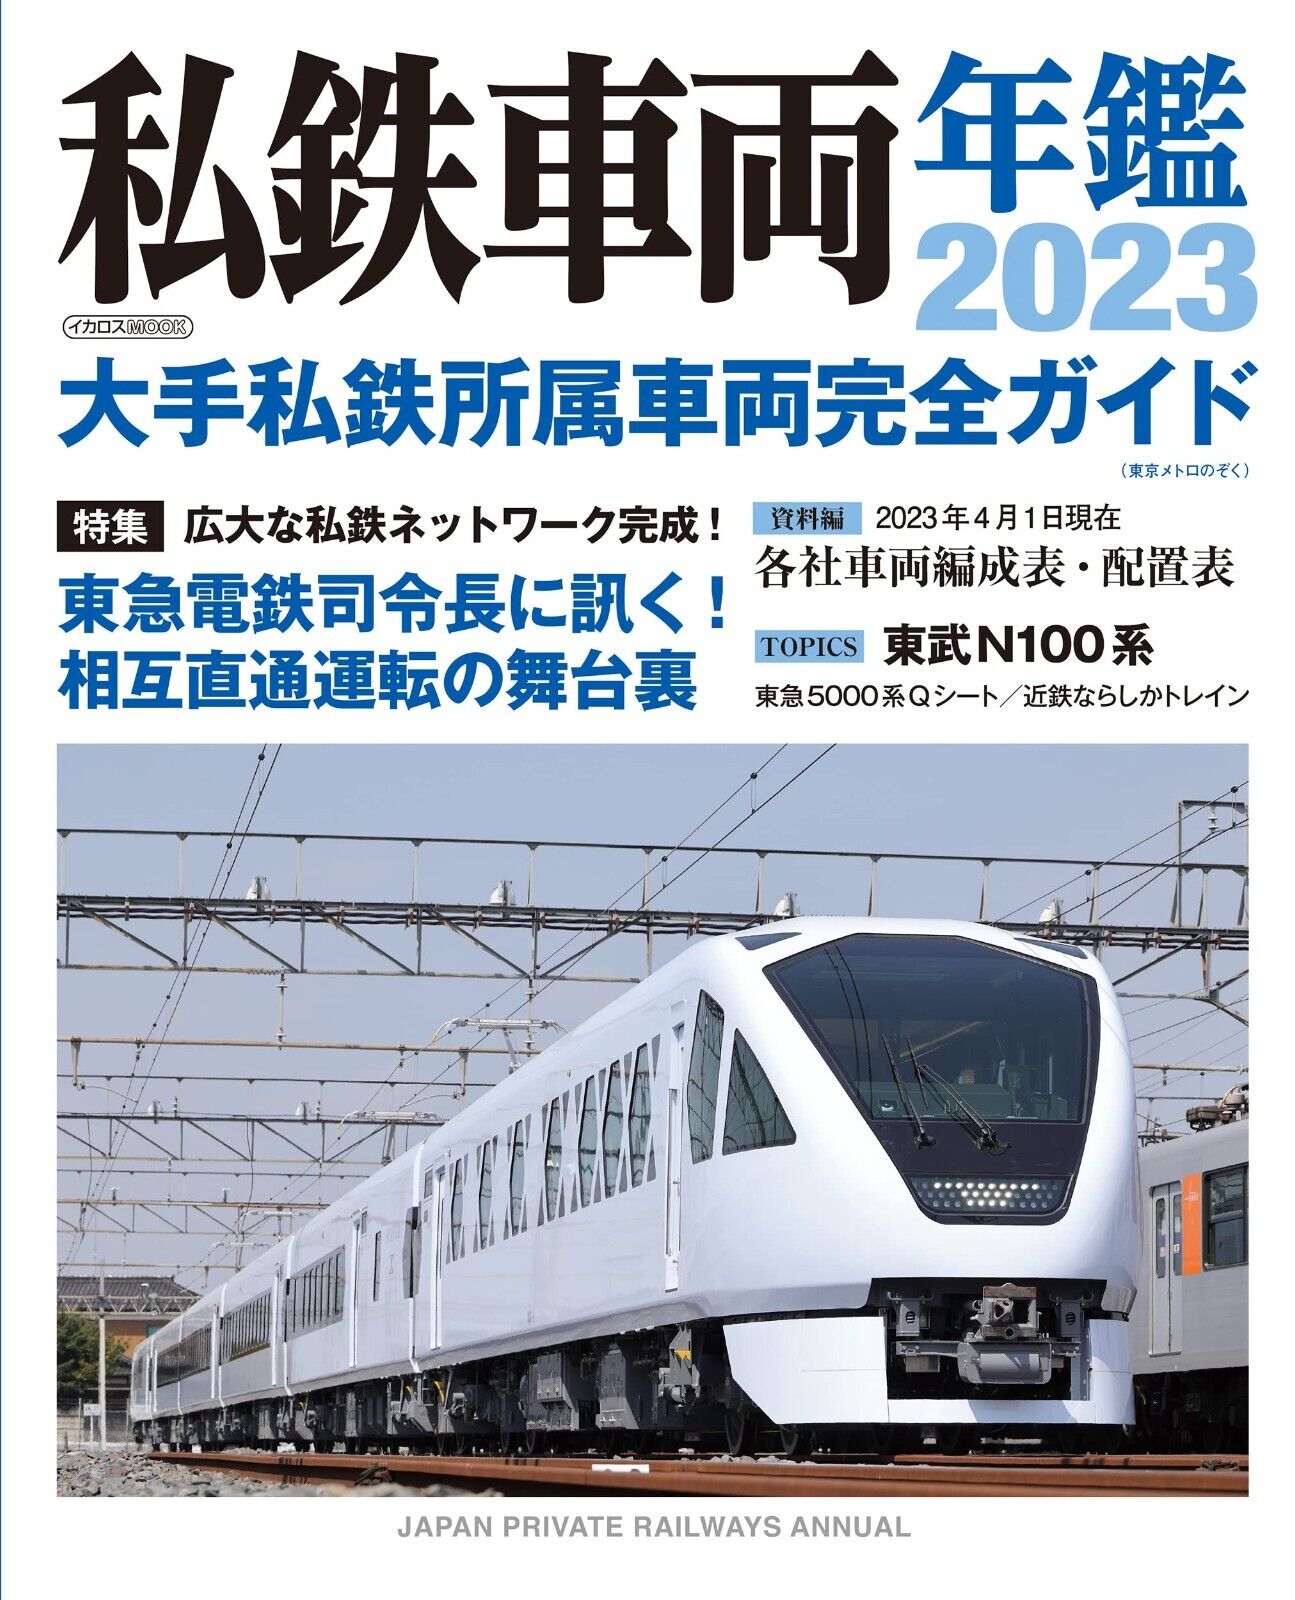 Private Railway Vehicle 2023 | JAPAN Train Book